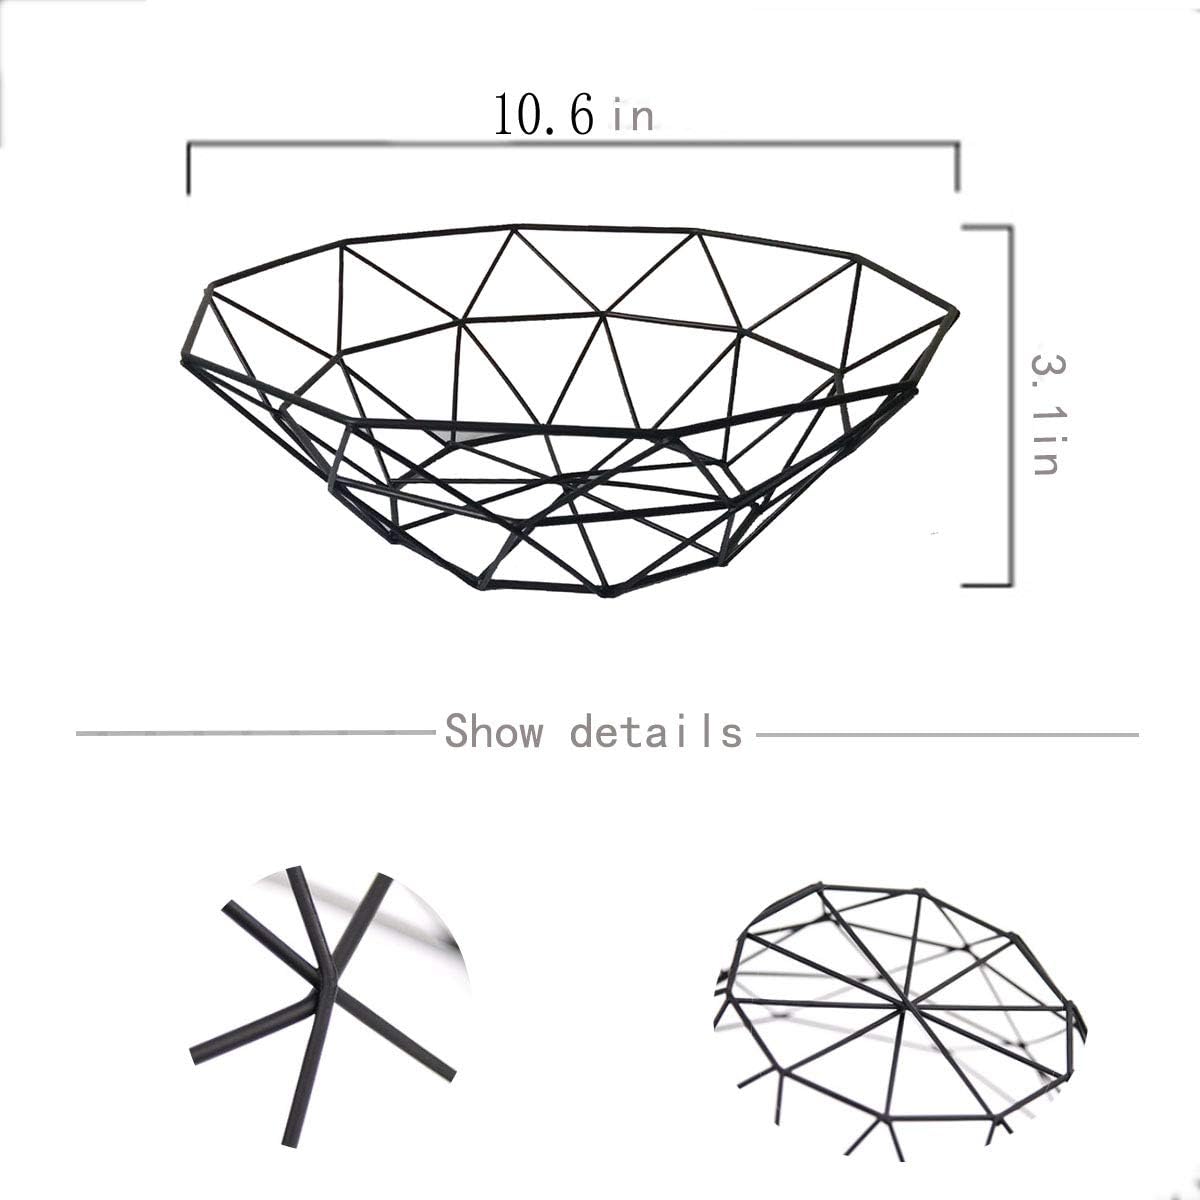 Creative Iron Fruit Basket-(5291) Black